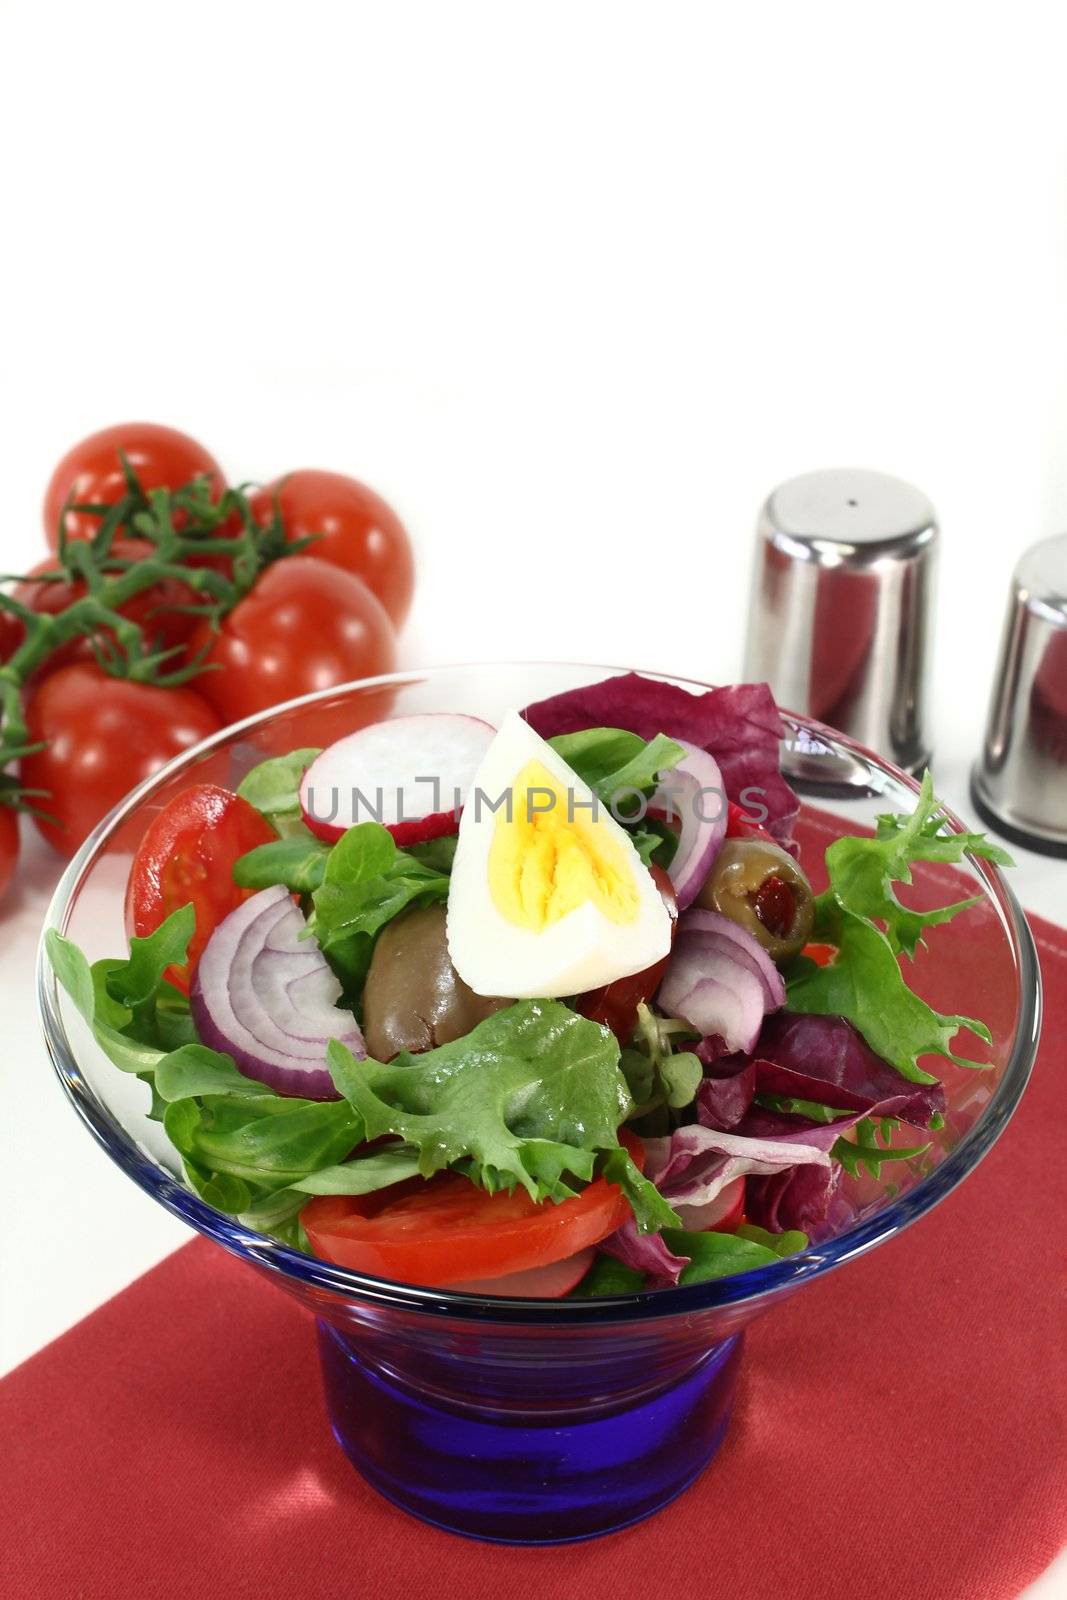 chief salad by silencefoto